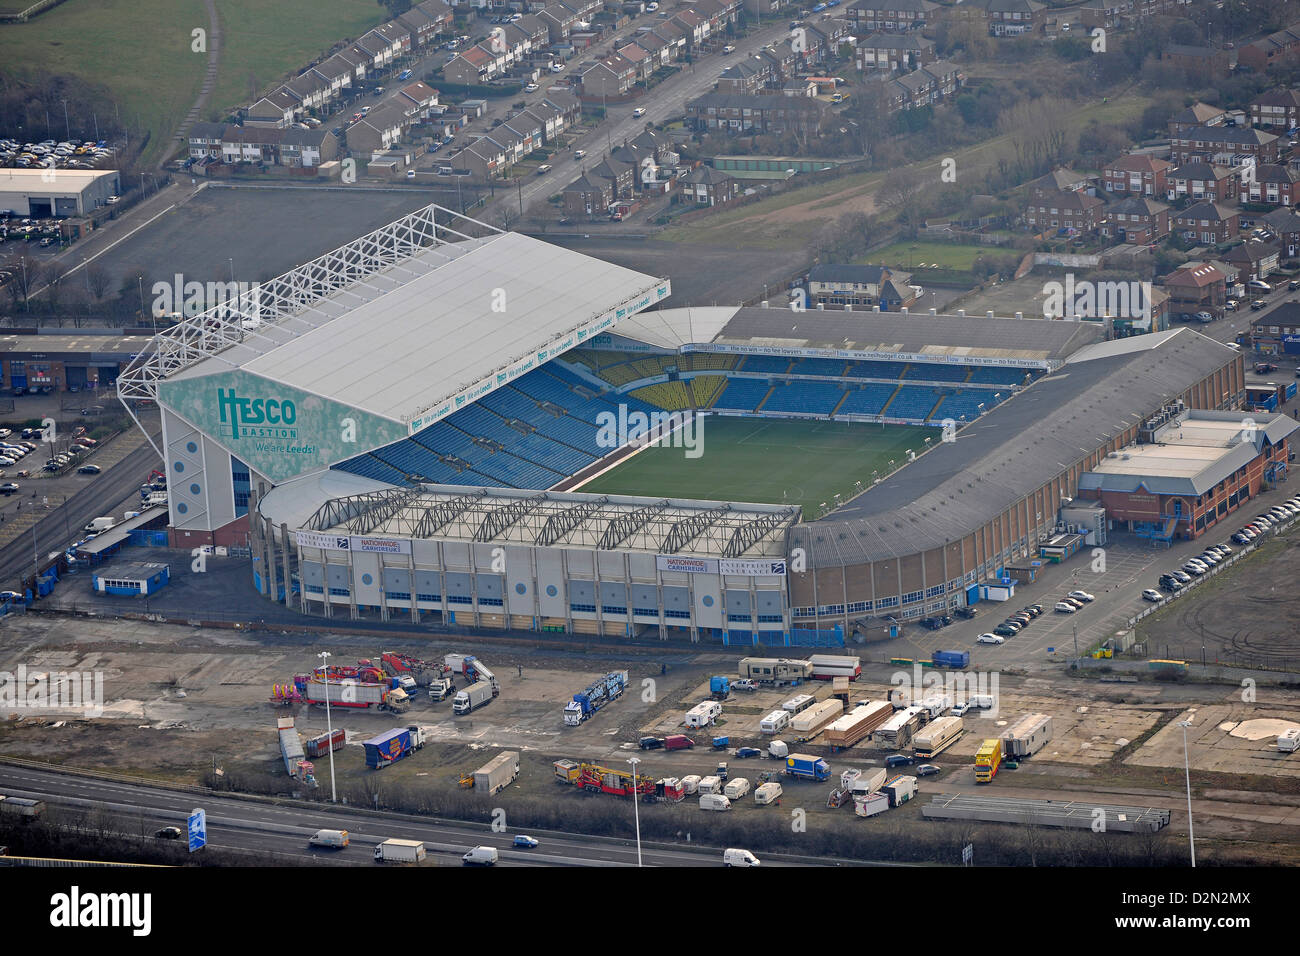 aerial-photograph-of-leeds-united-elland-road-stadium-D2N2MX.jpg